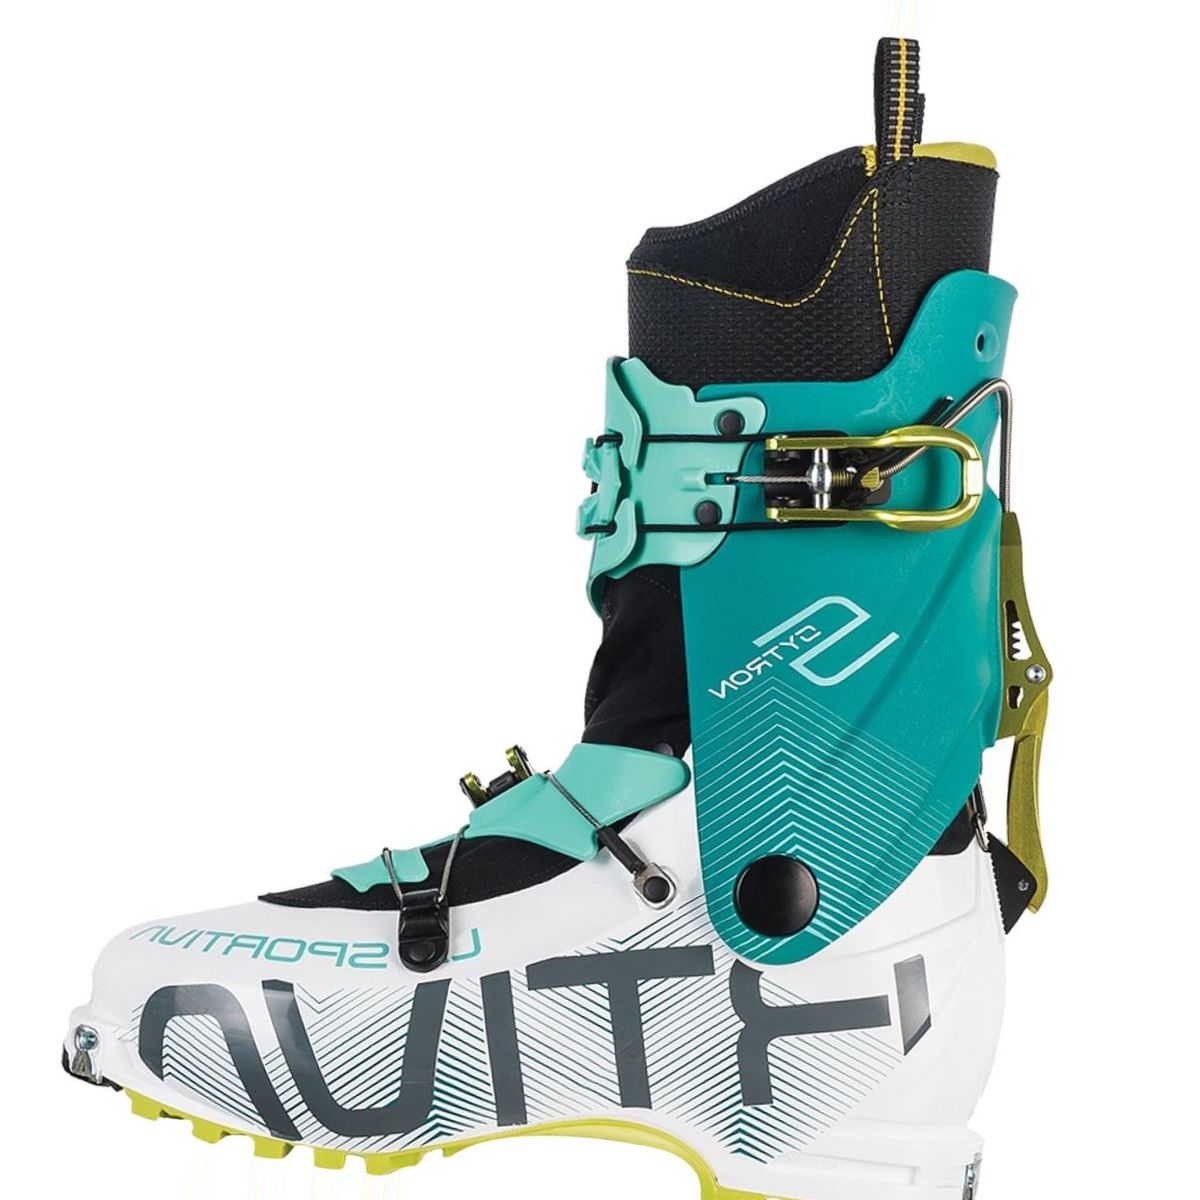 La Sportiva Sytron Alpine Touring Boot - Women's